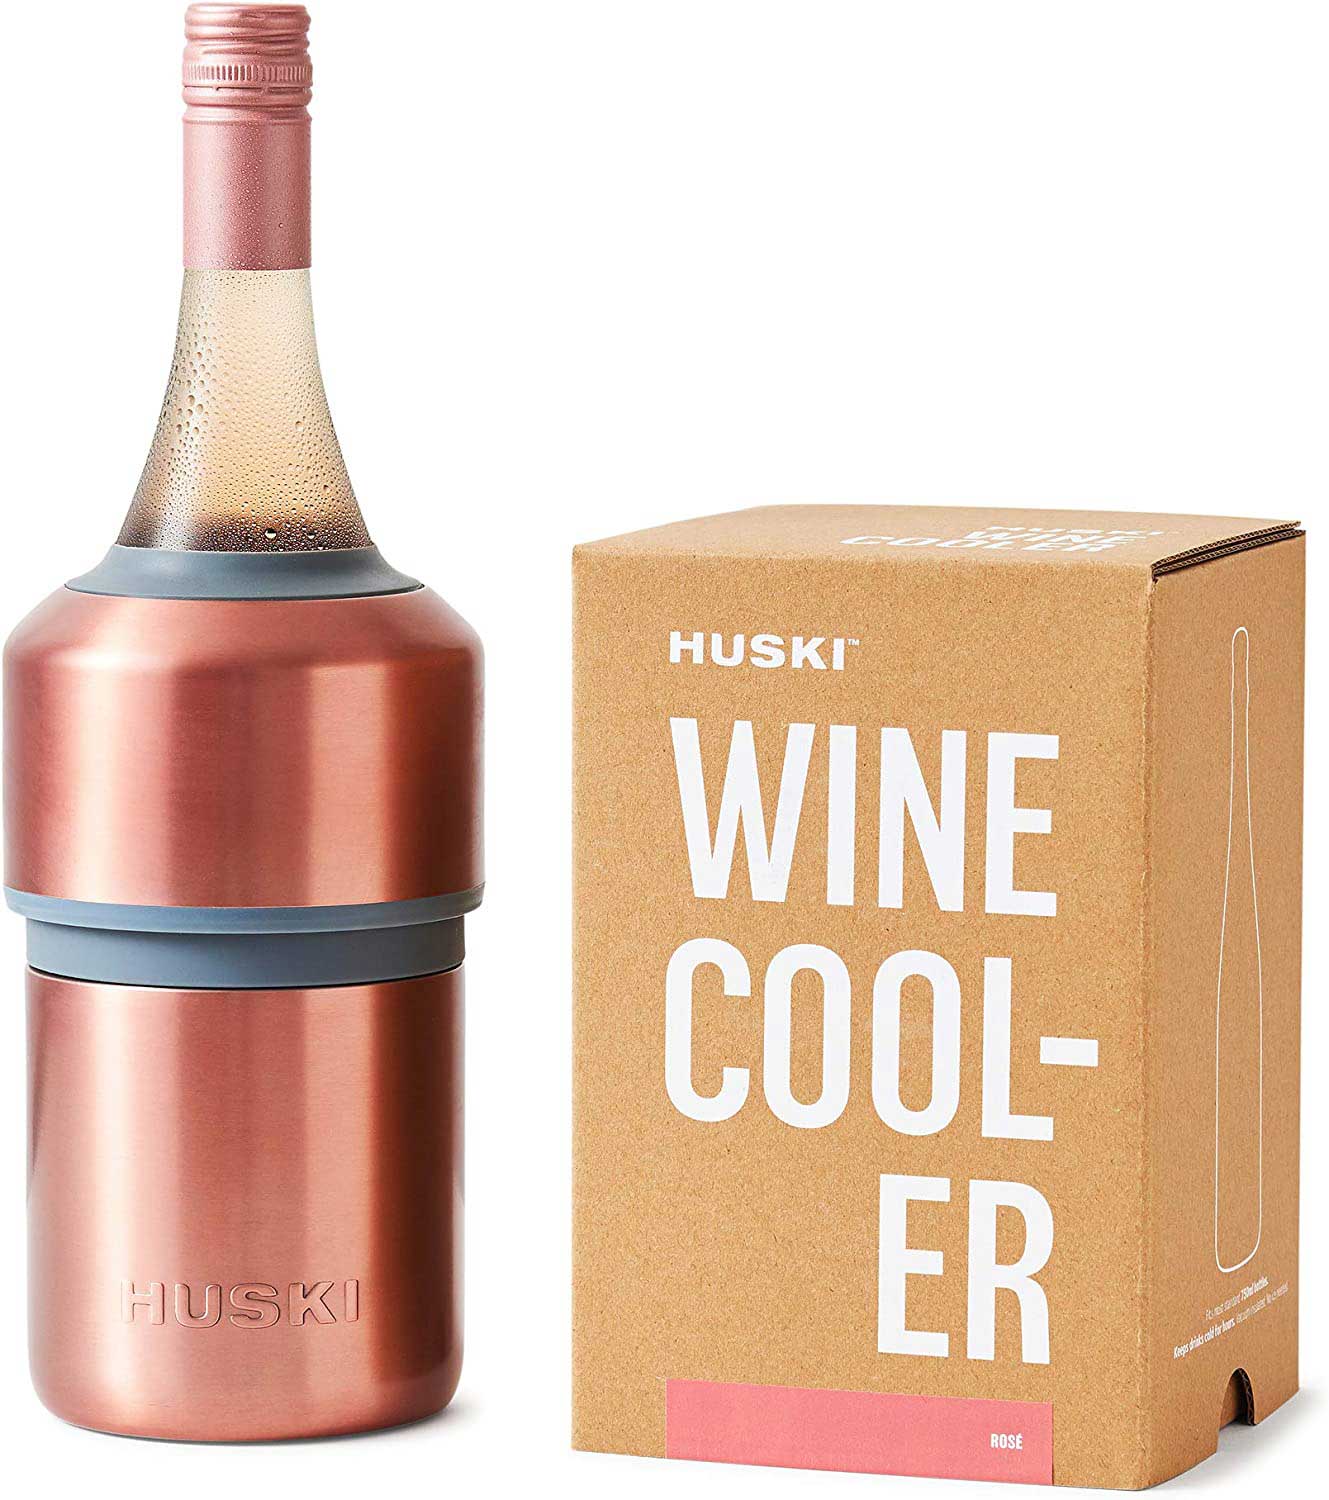 wine bottle in cooler box